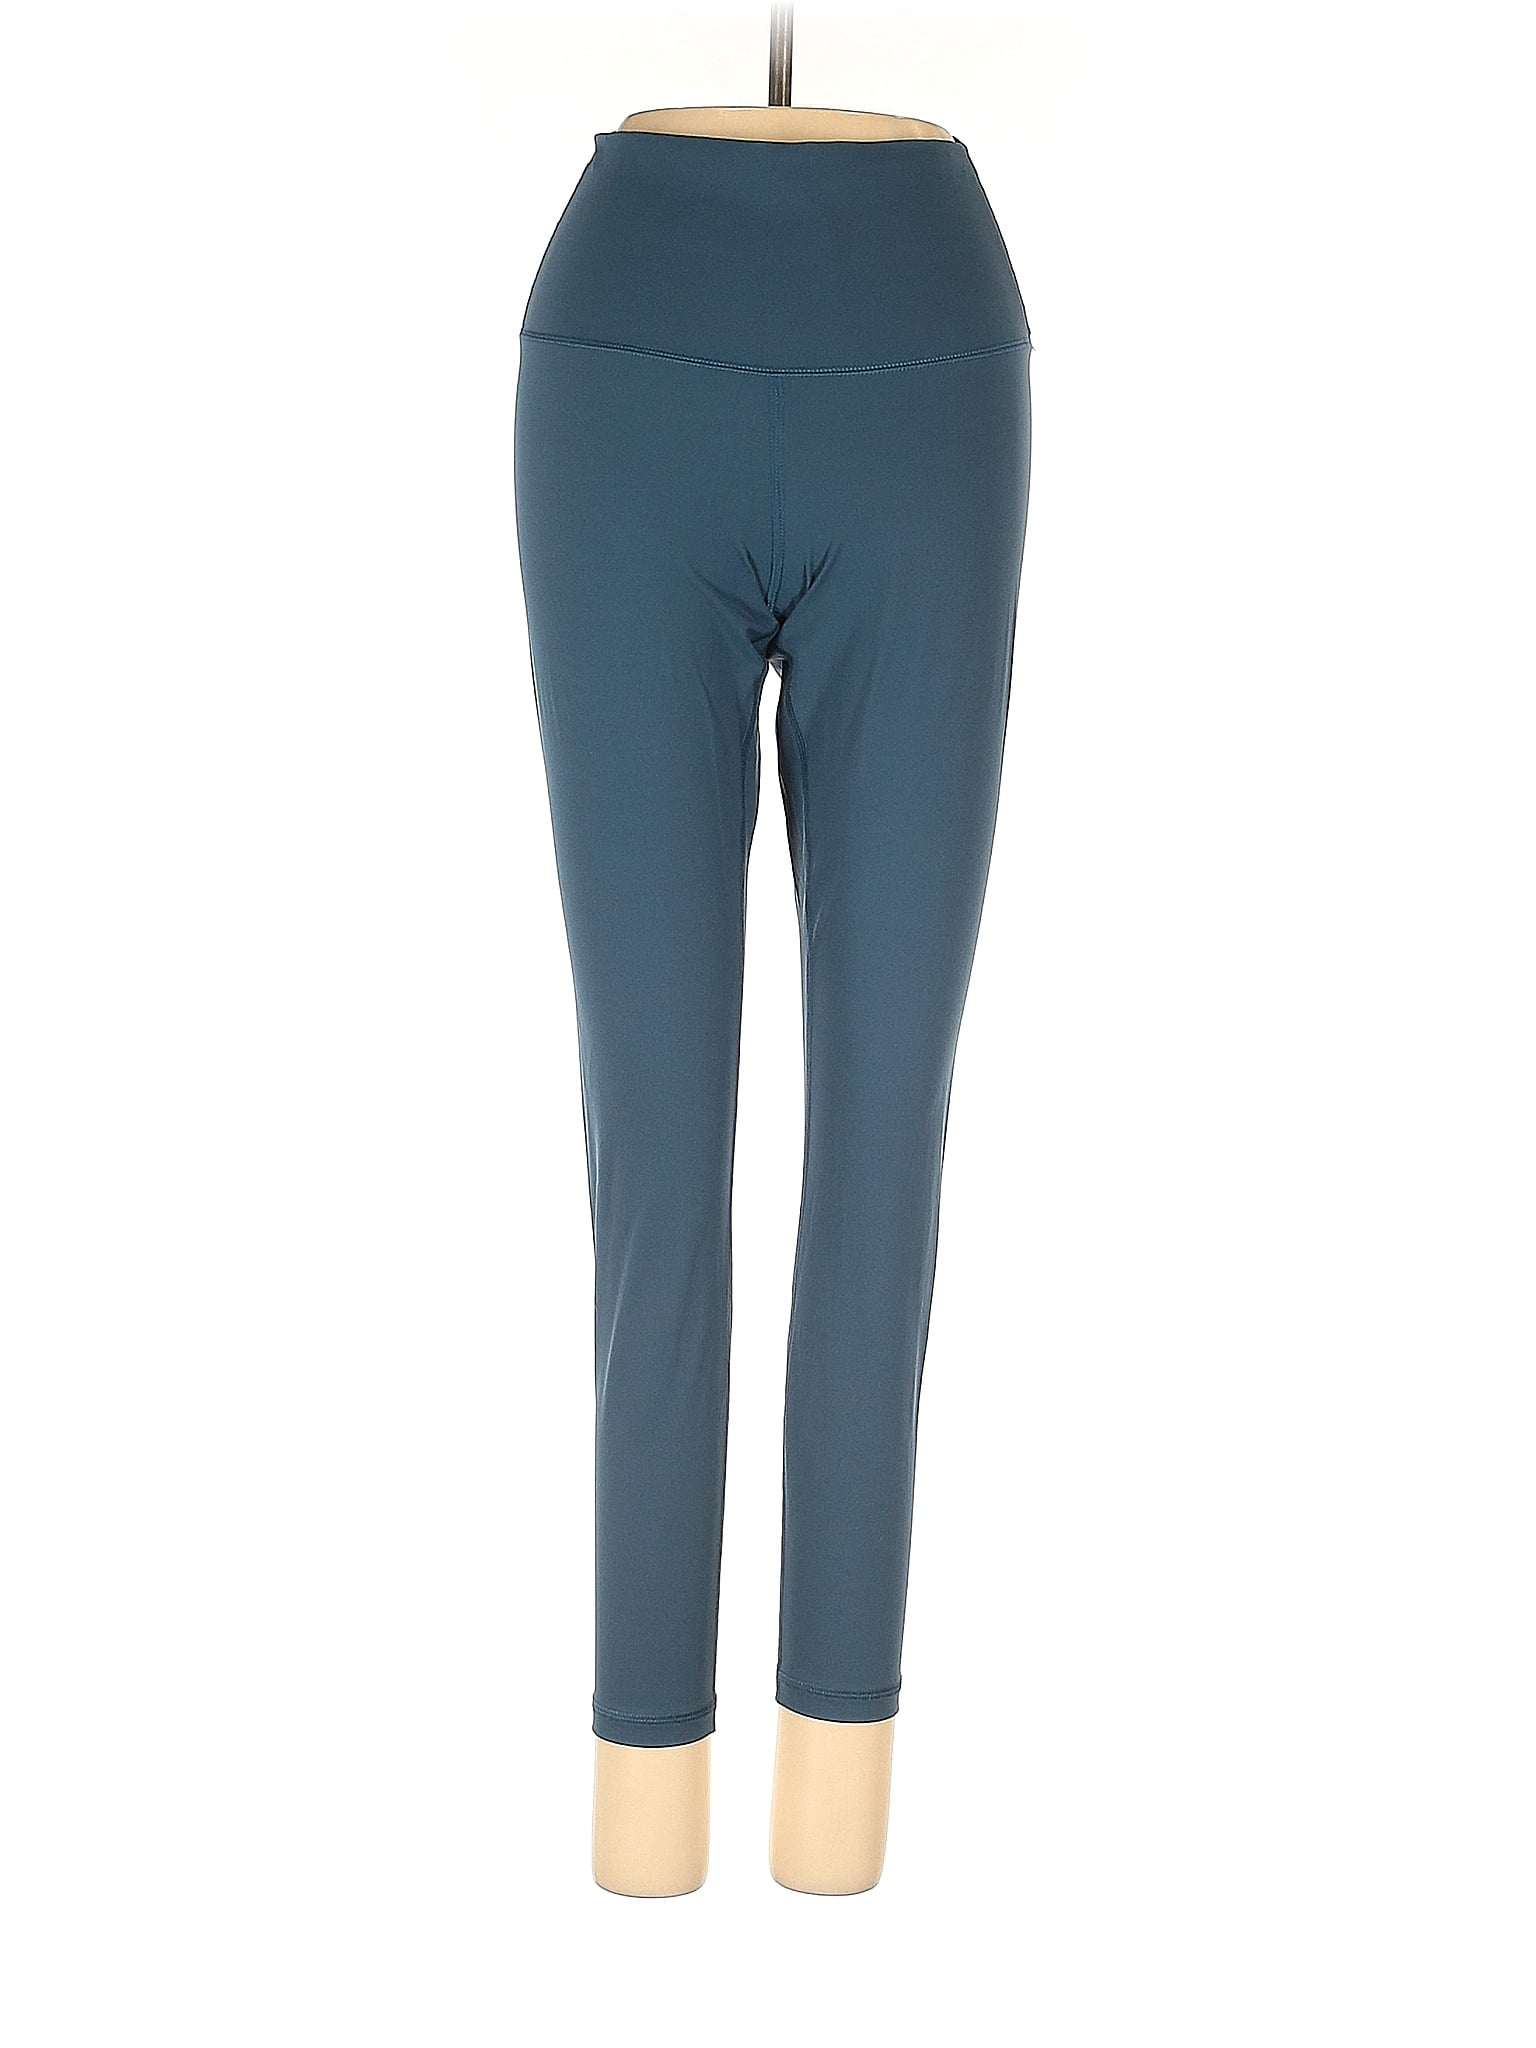 Everlane Teal Blue Yoga Pants Size XS - 68% off | thredUP